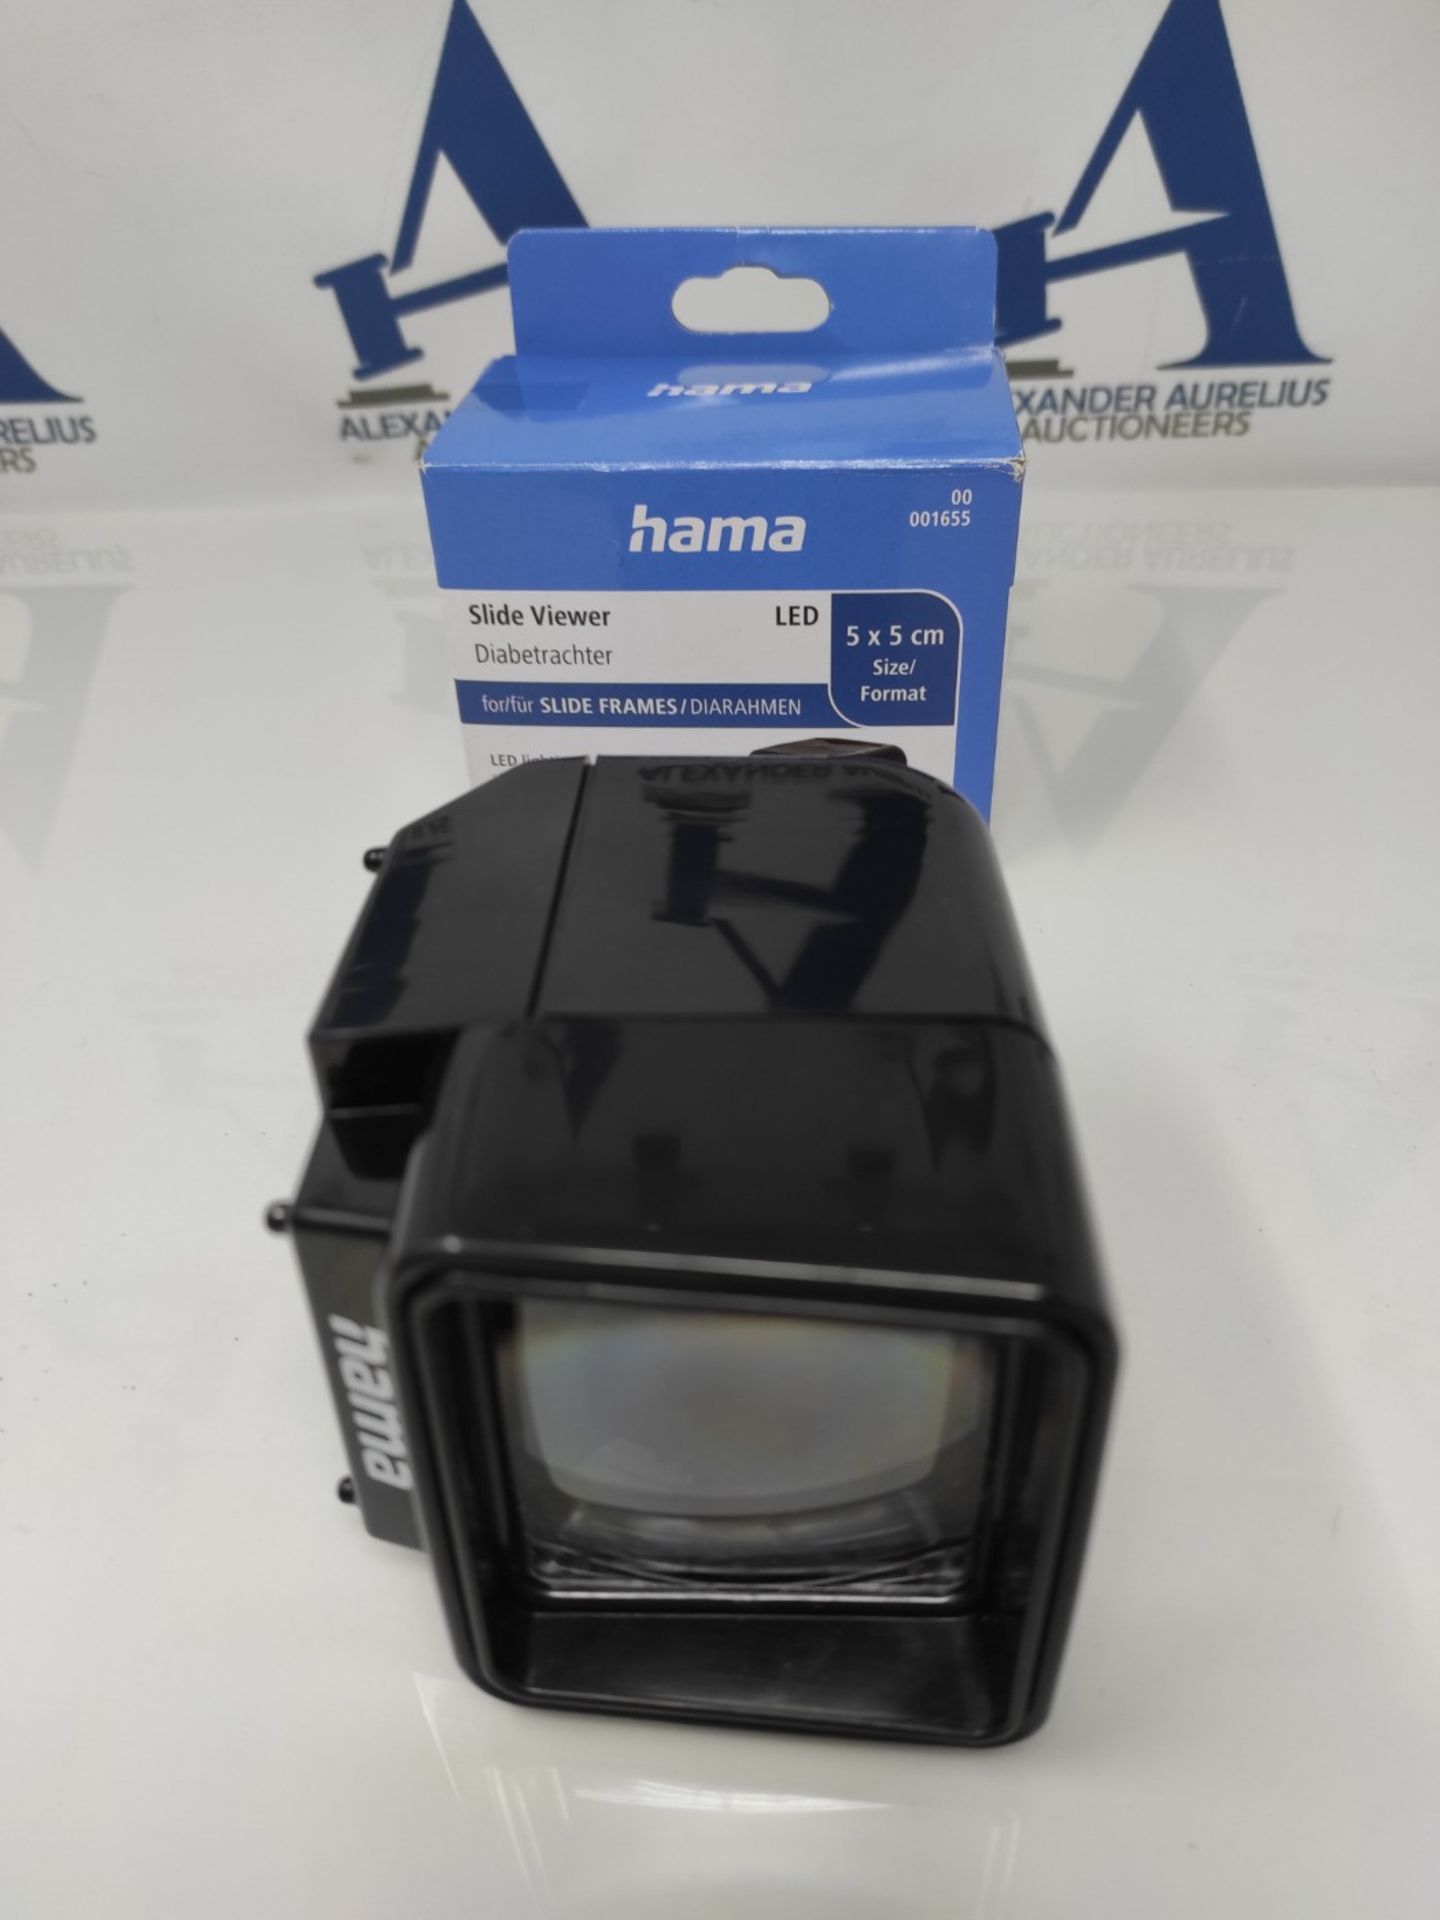 Hama LED Slide Viewer, 3 x Magnification - Image 2 of 2